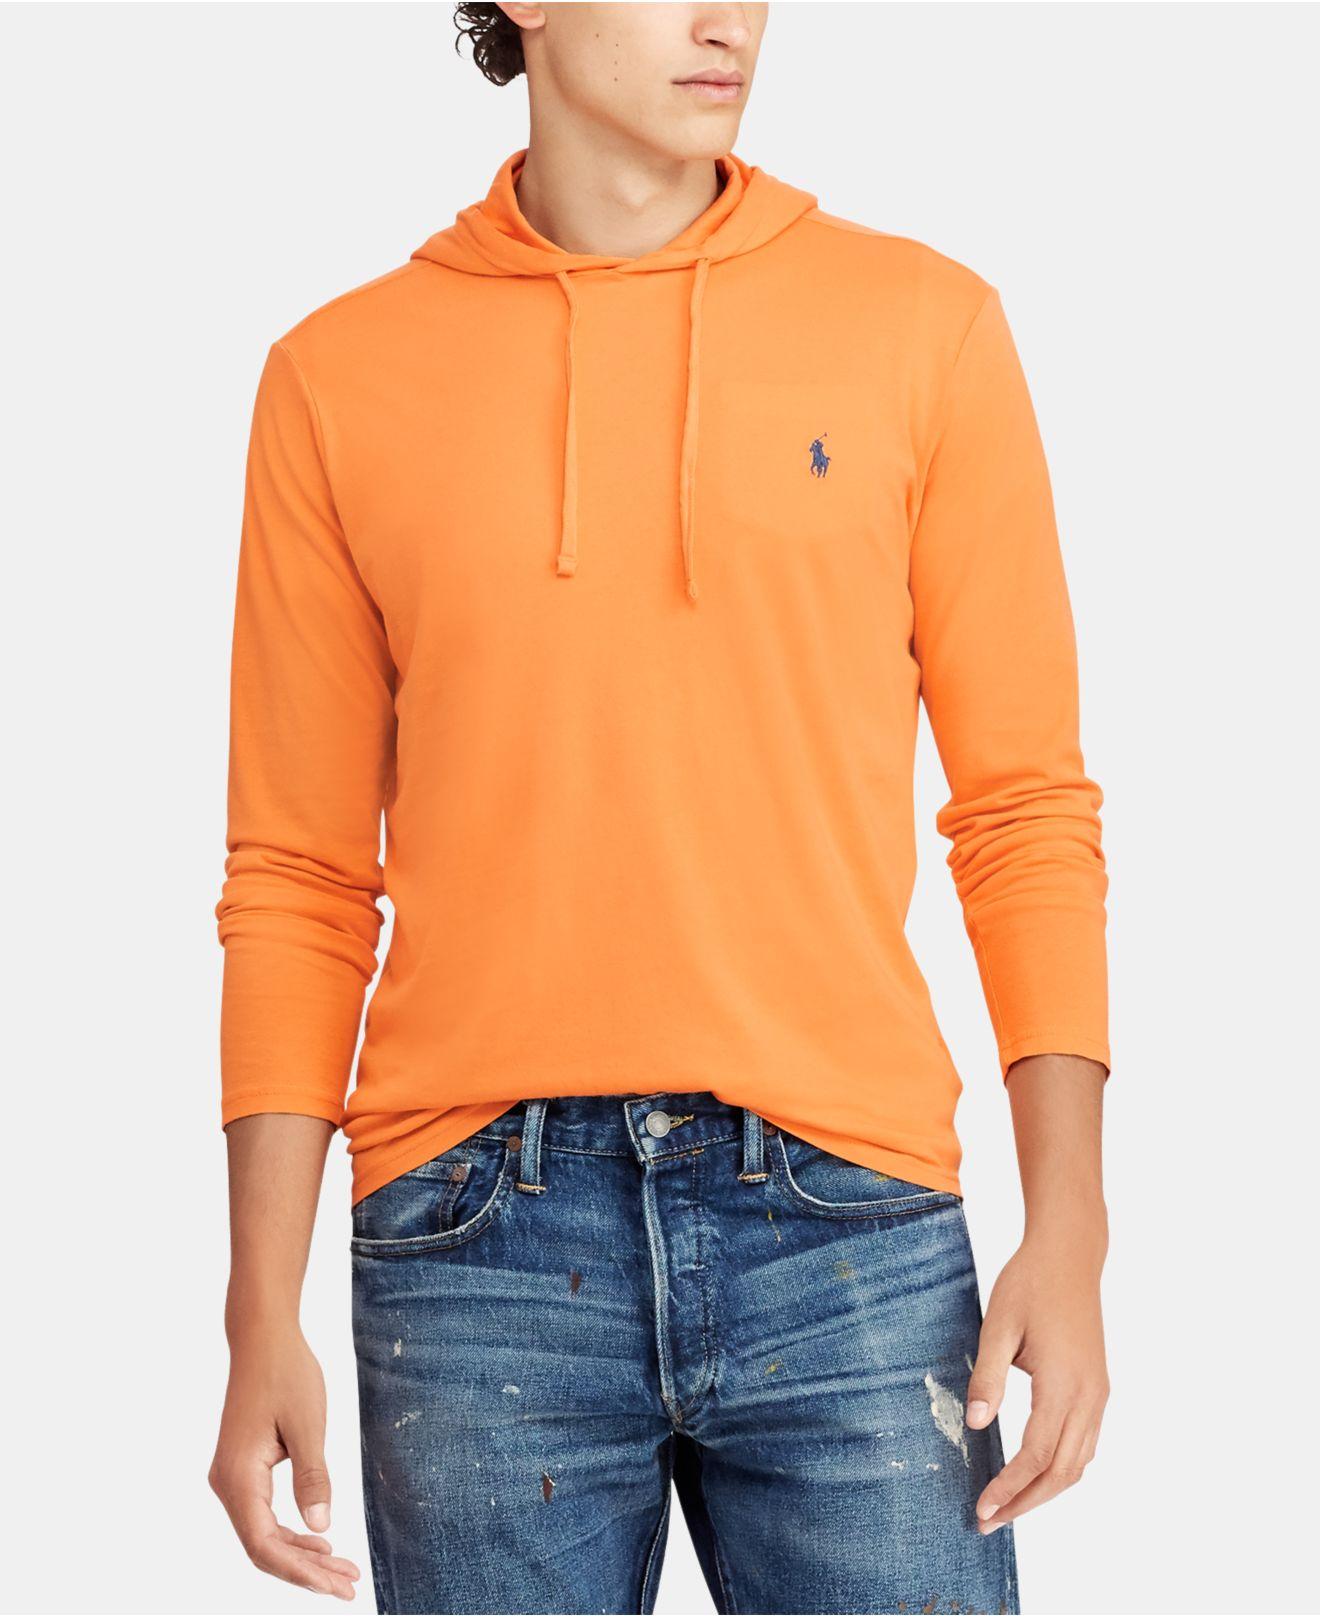 Polo Ralph Lauren Cotton Jersey T-shirt Hoodie in Orange for Men - Lyst